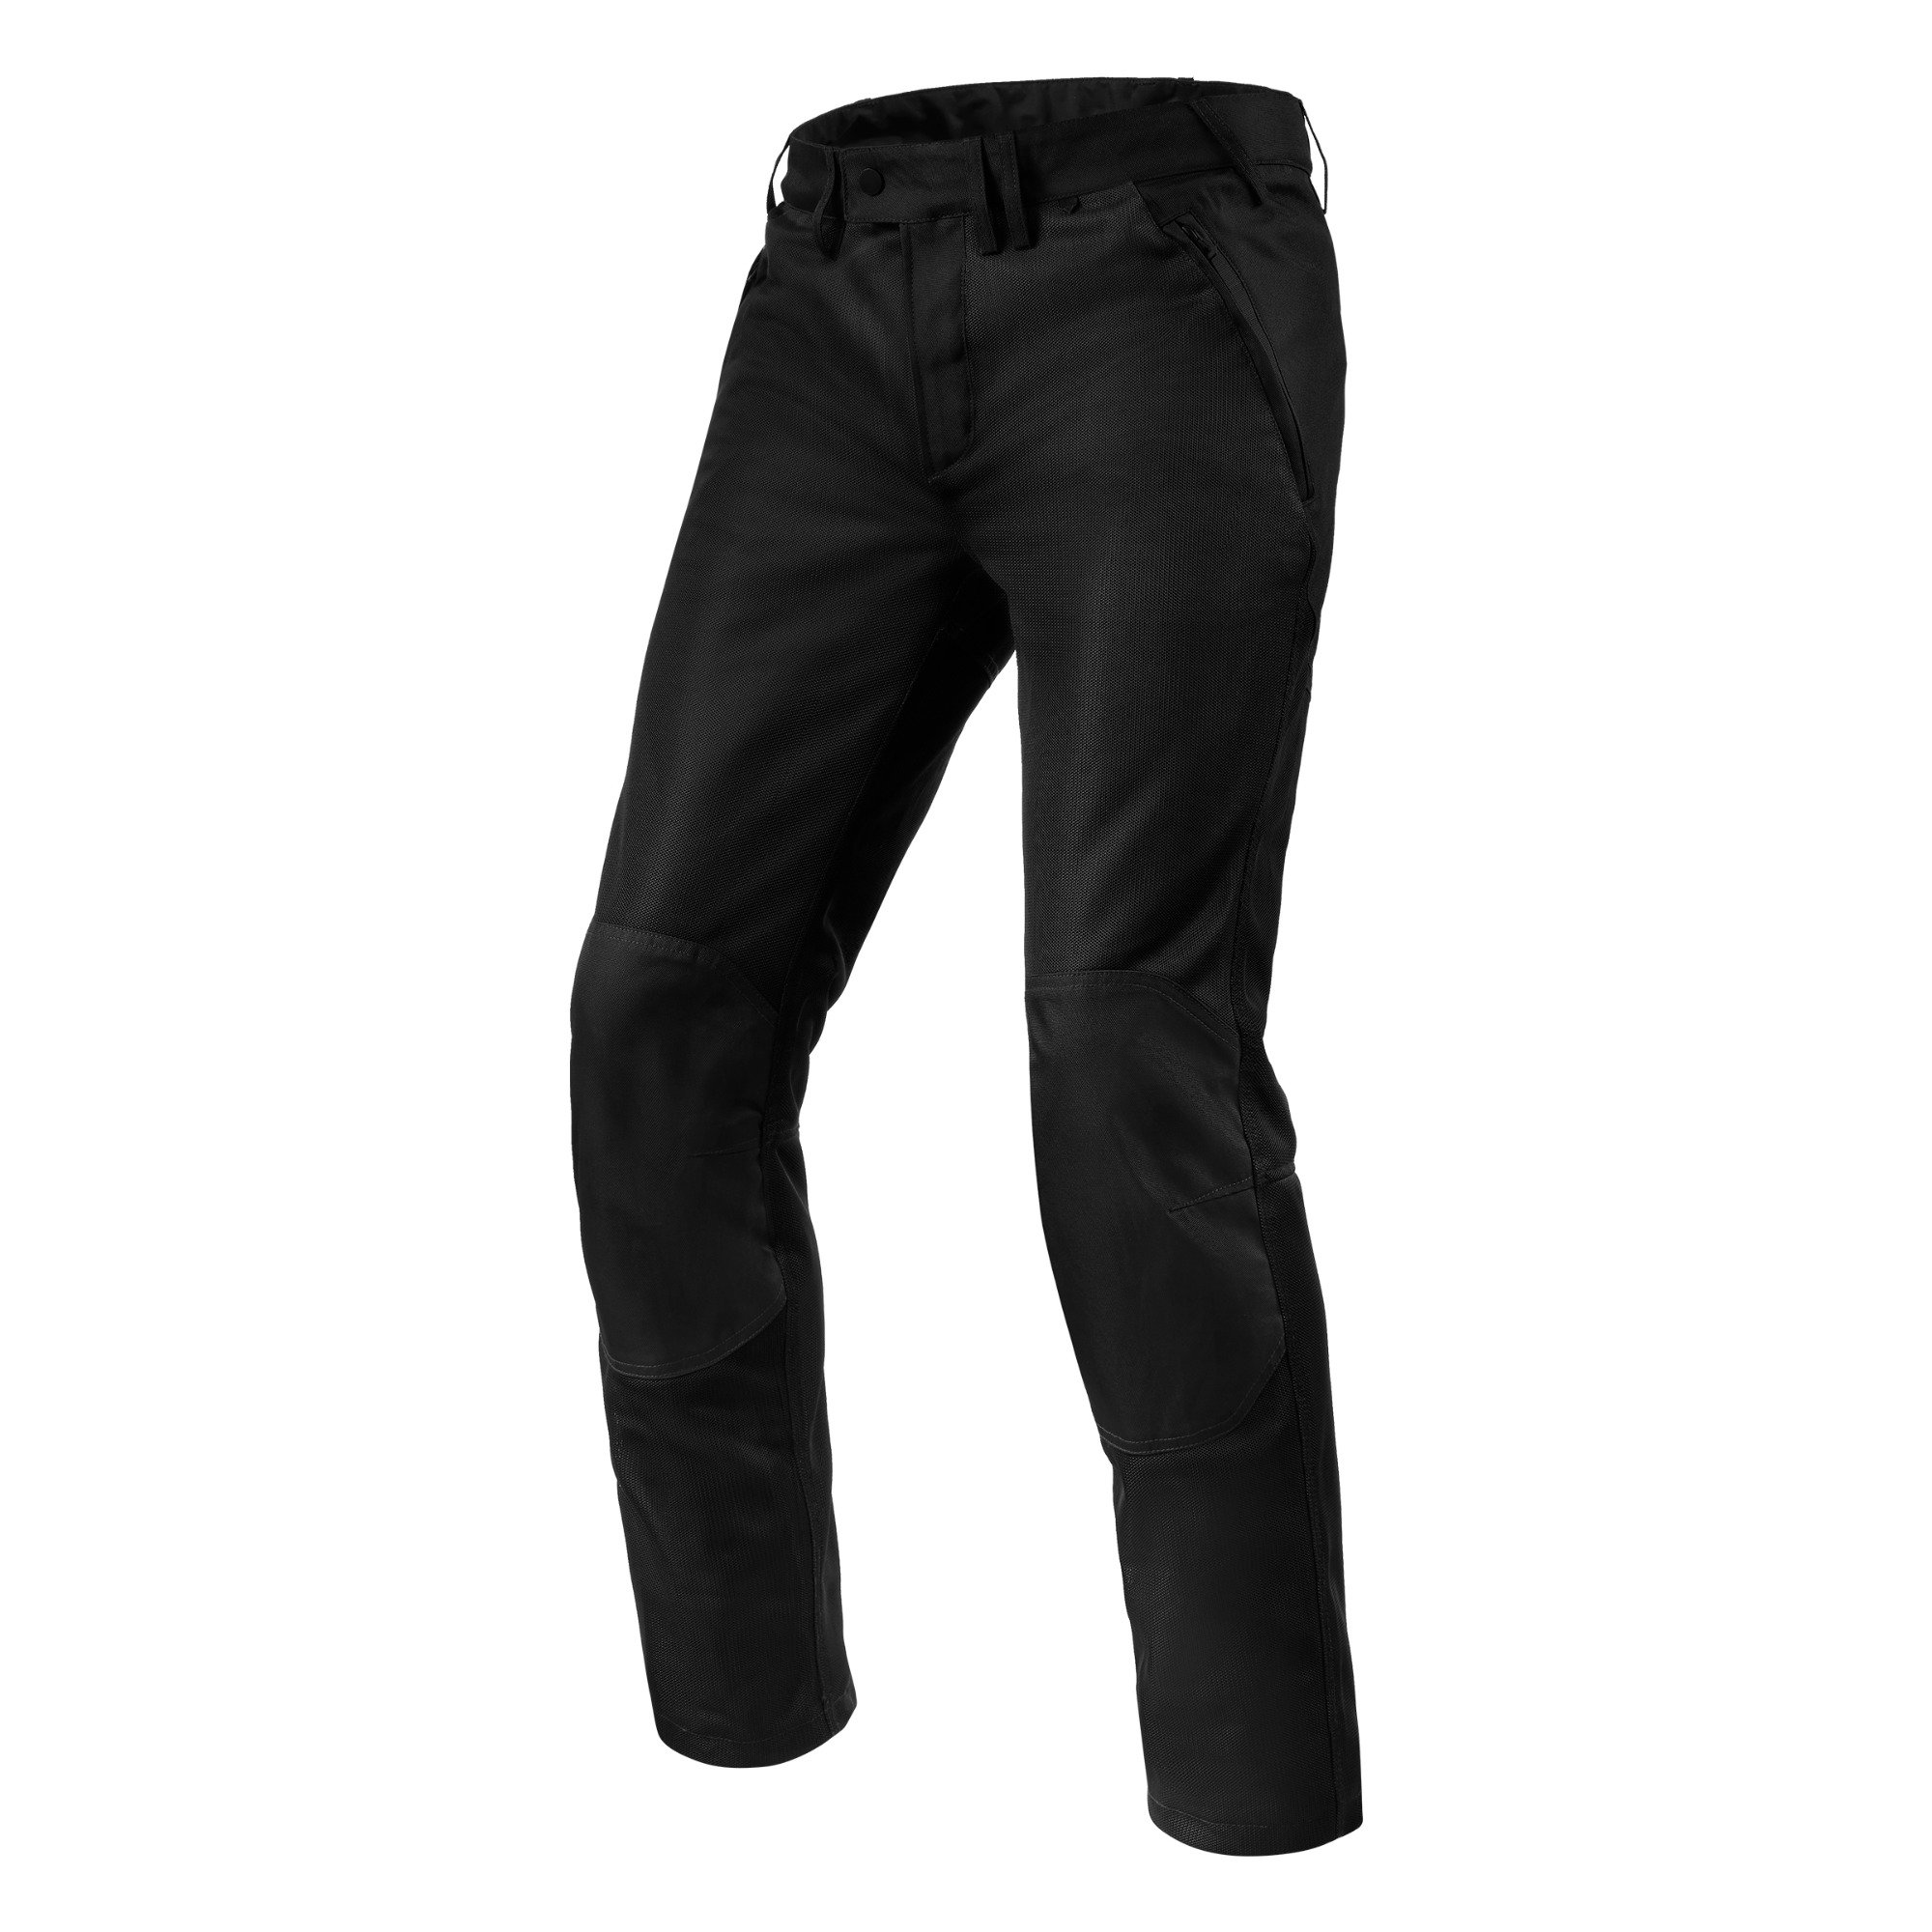 Image of REV'IT! Pants Eclipse 2 Black Long Motorcycle Pants Size S ID 8700001368643